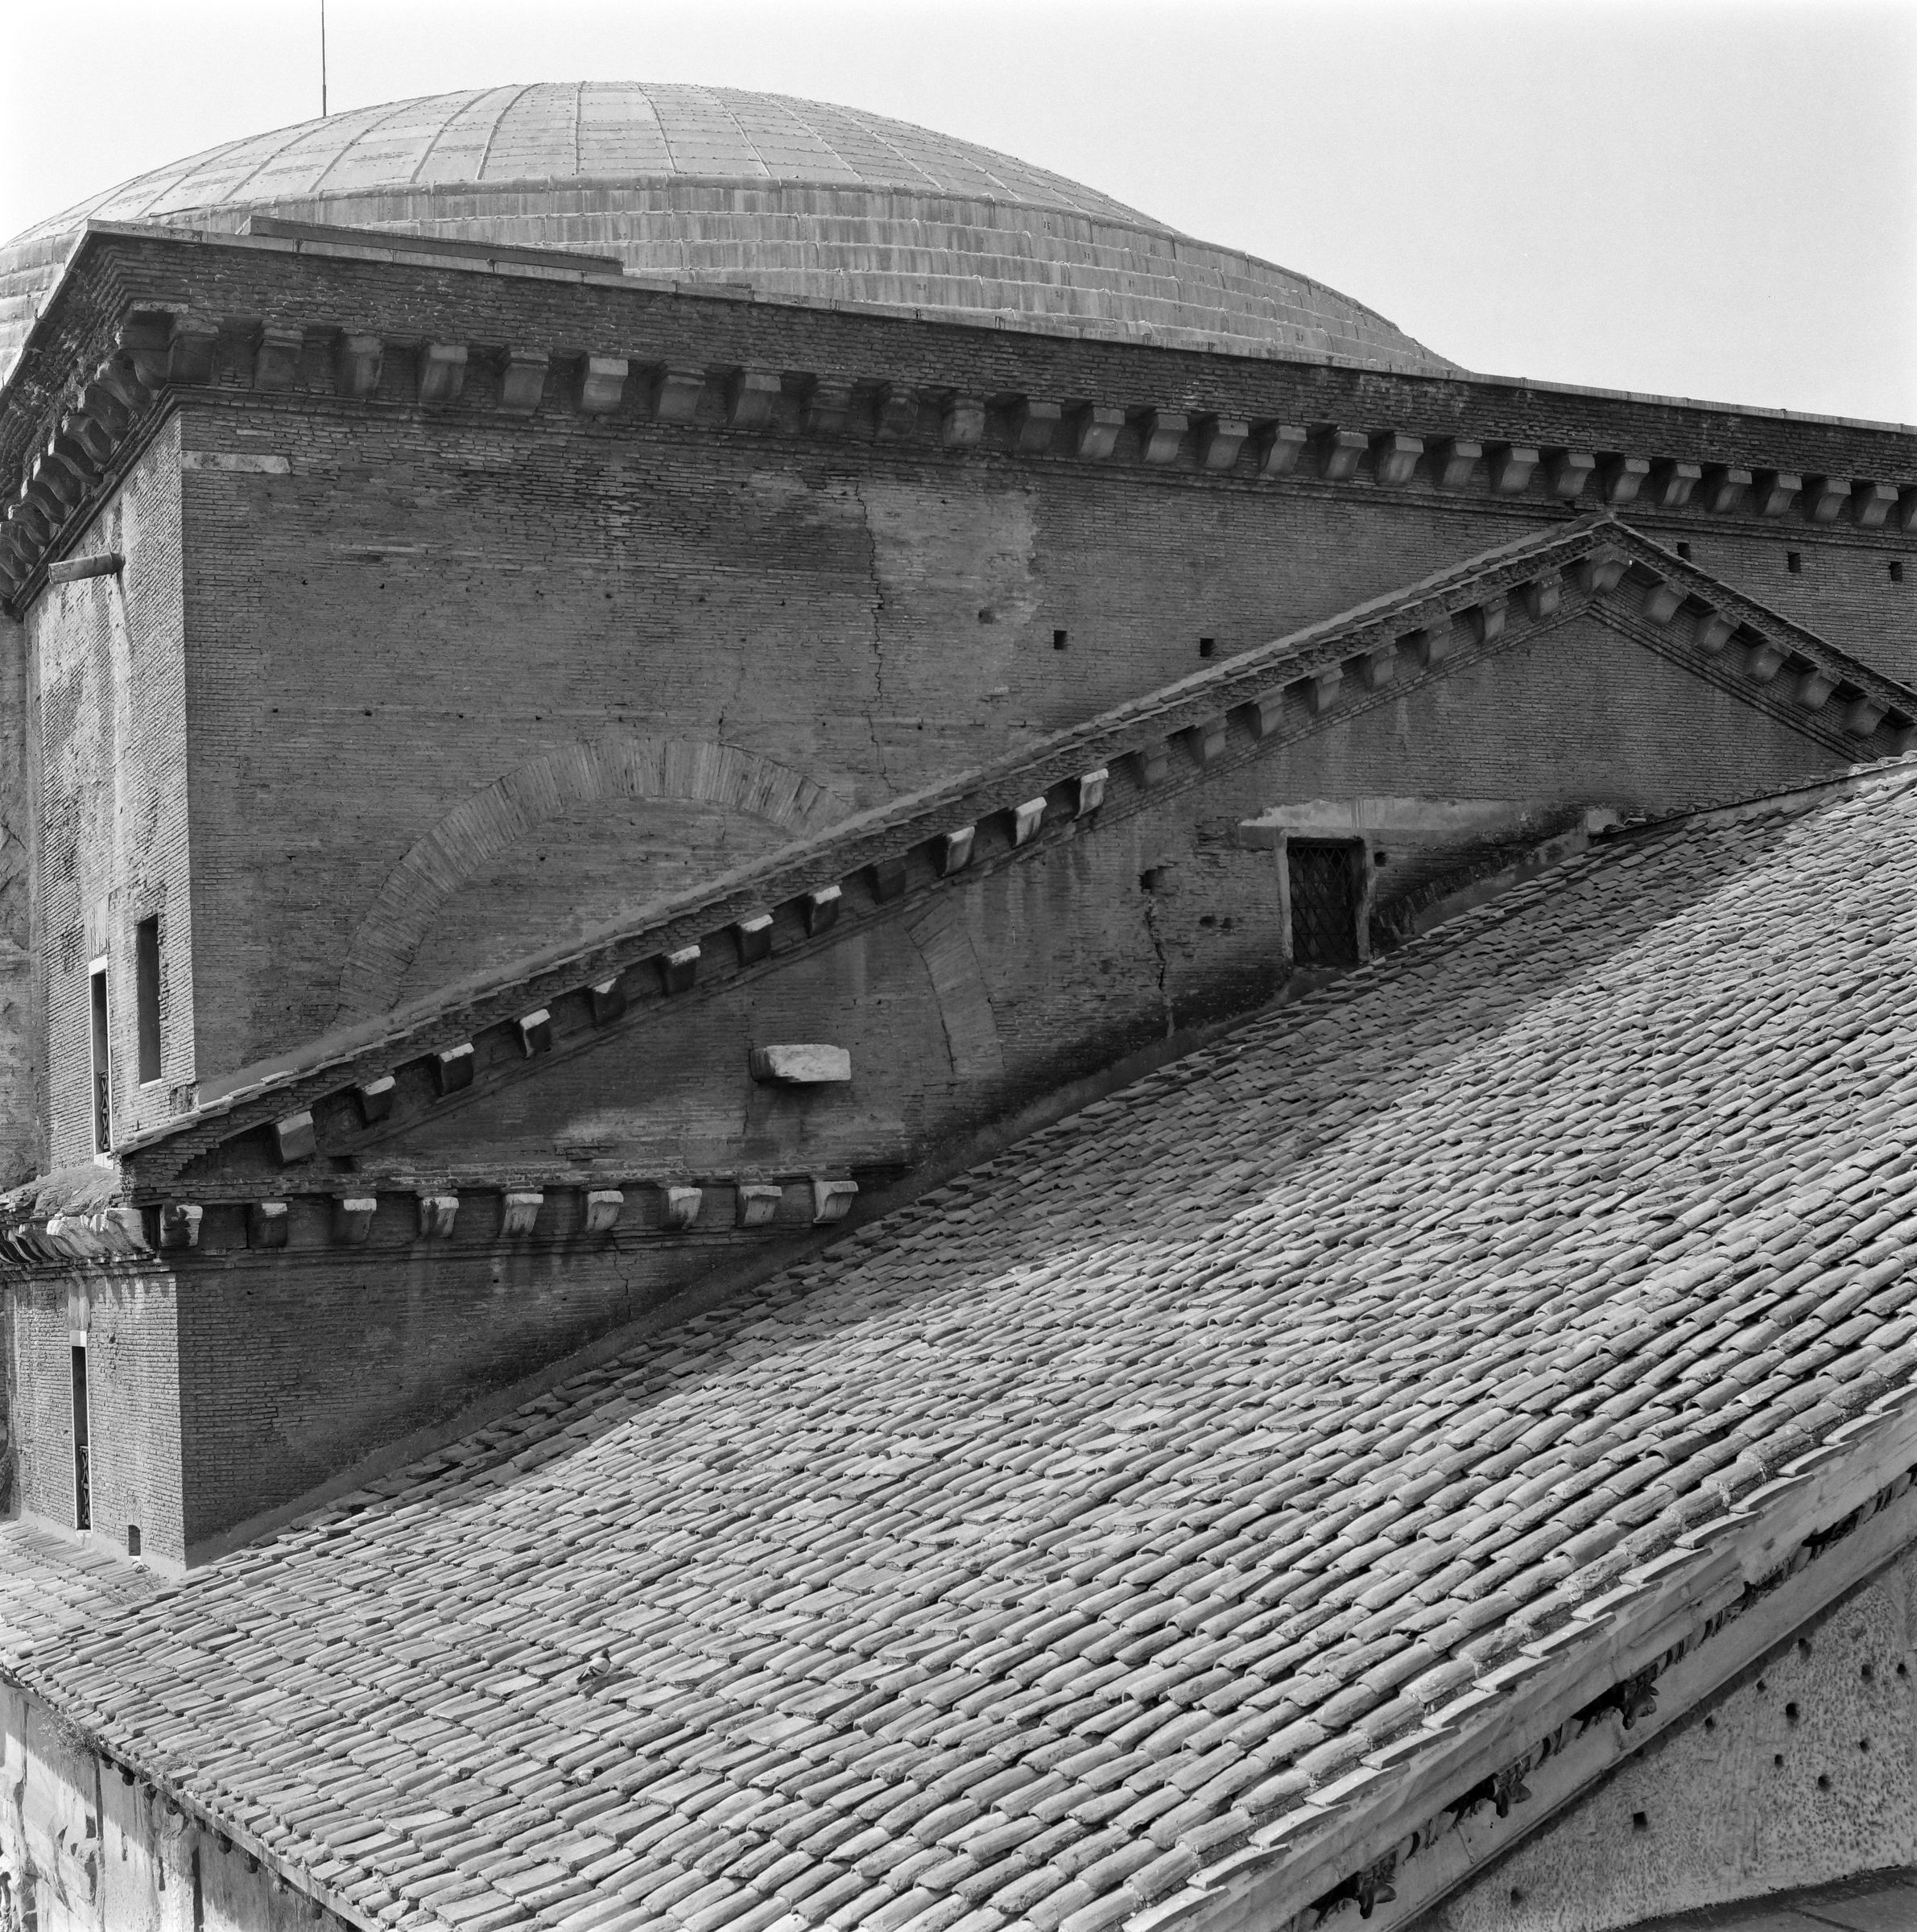 Fotografo non identificato, Pantheon; Pantheon (Chiesa di S. Maria ad Martyres), 1951-2000, gelatina ai sali d'argento, 6x6 cm, N078280